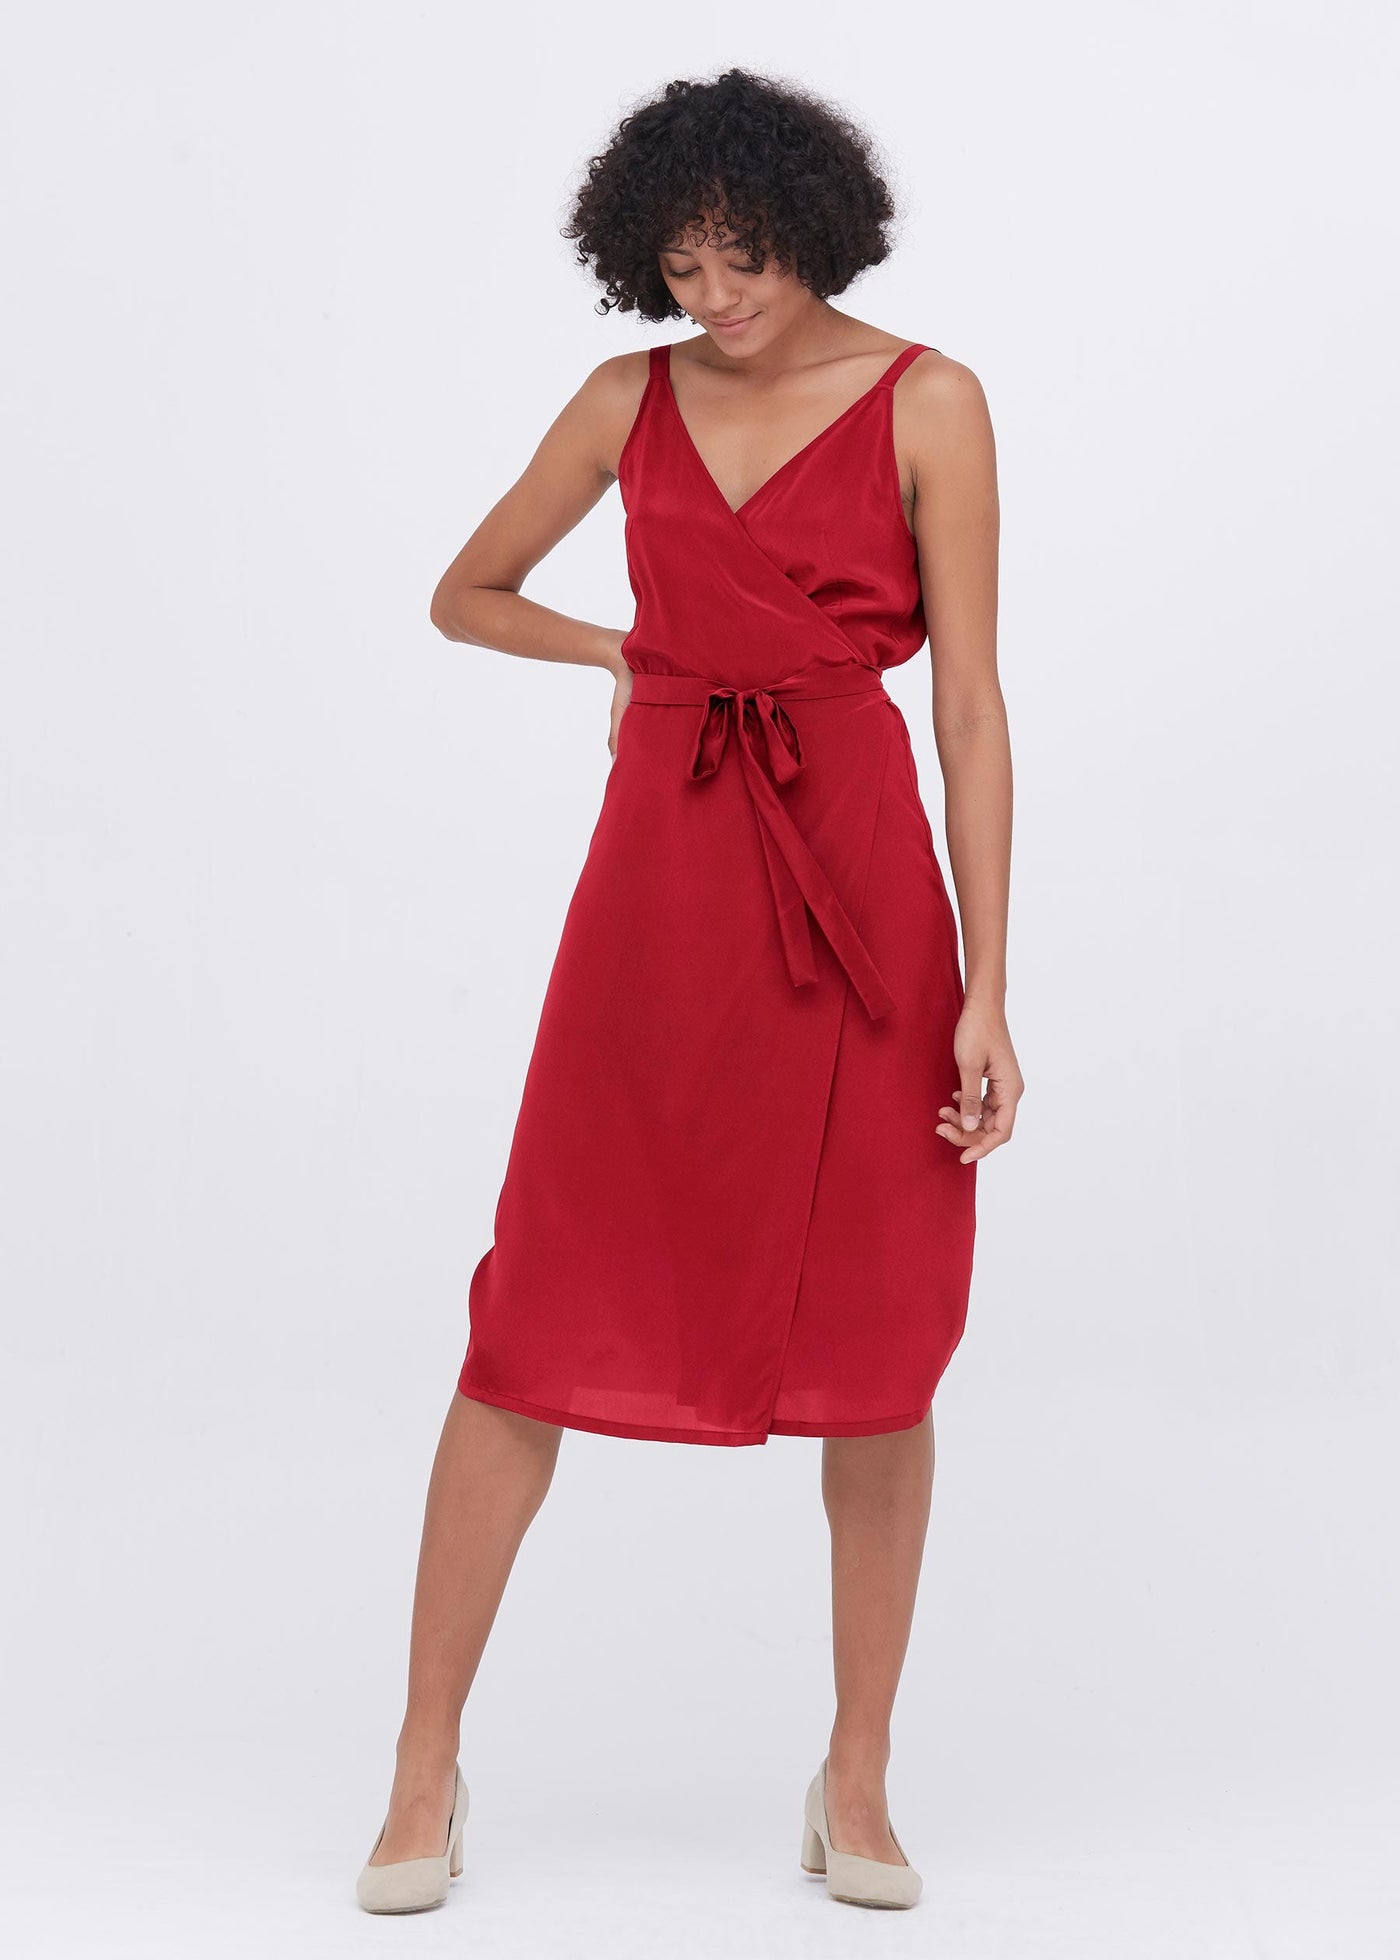 Sexy Fashion Silk Camisole Wrap Dress Cardinal